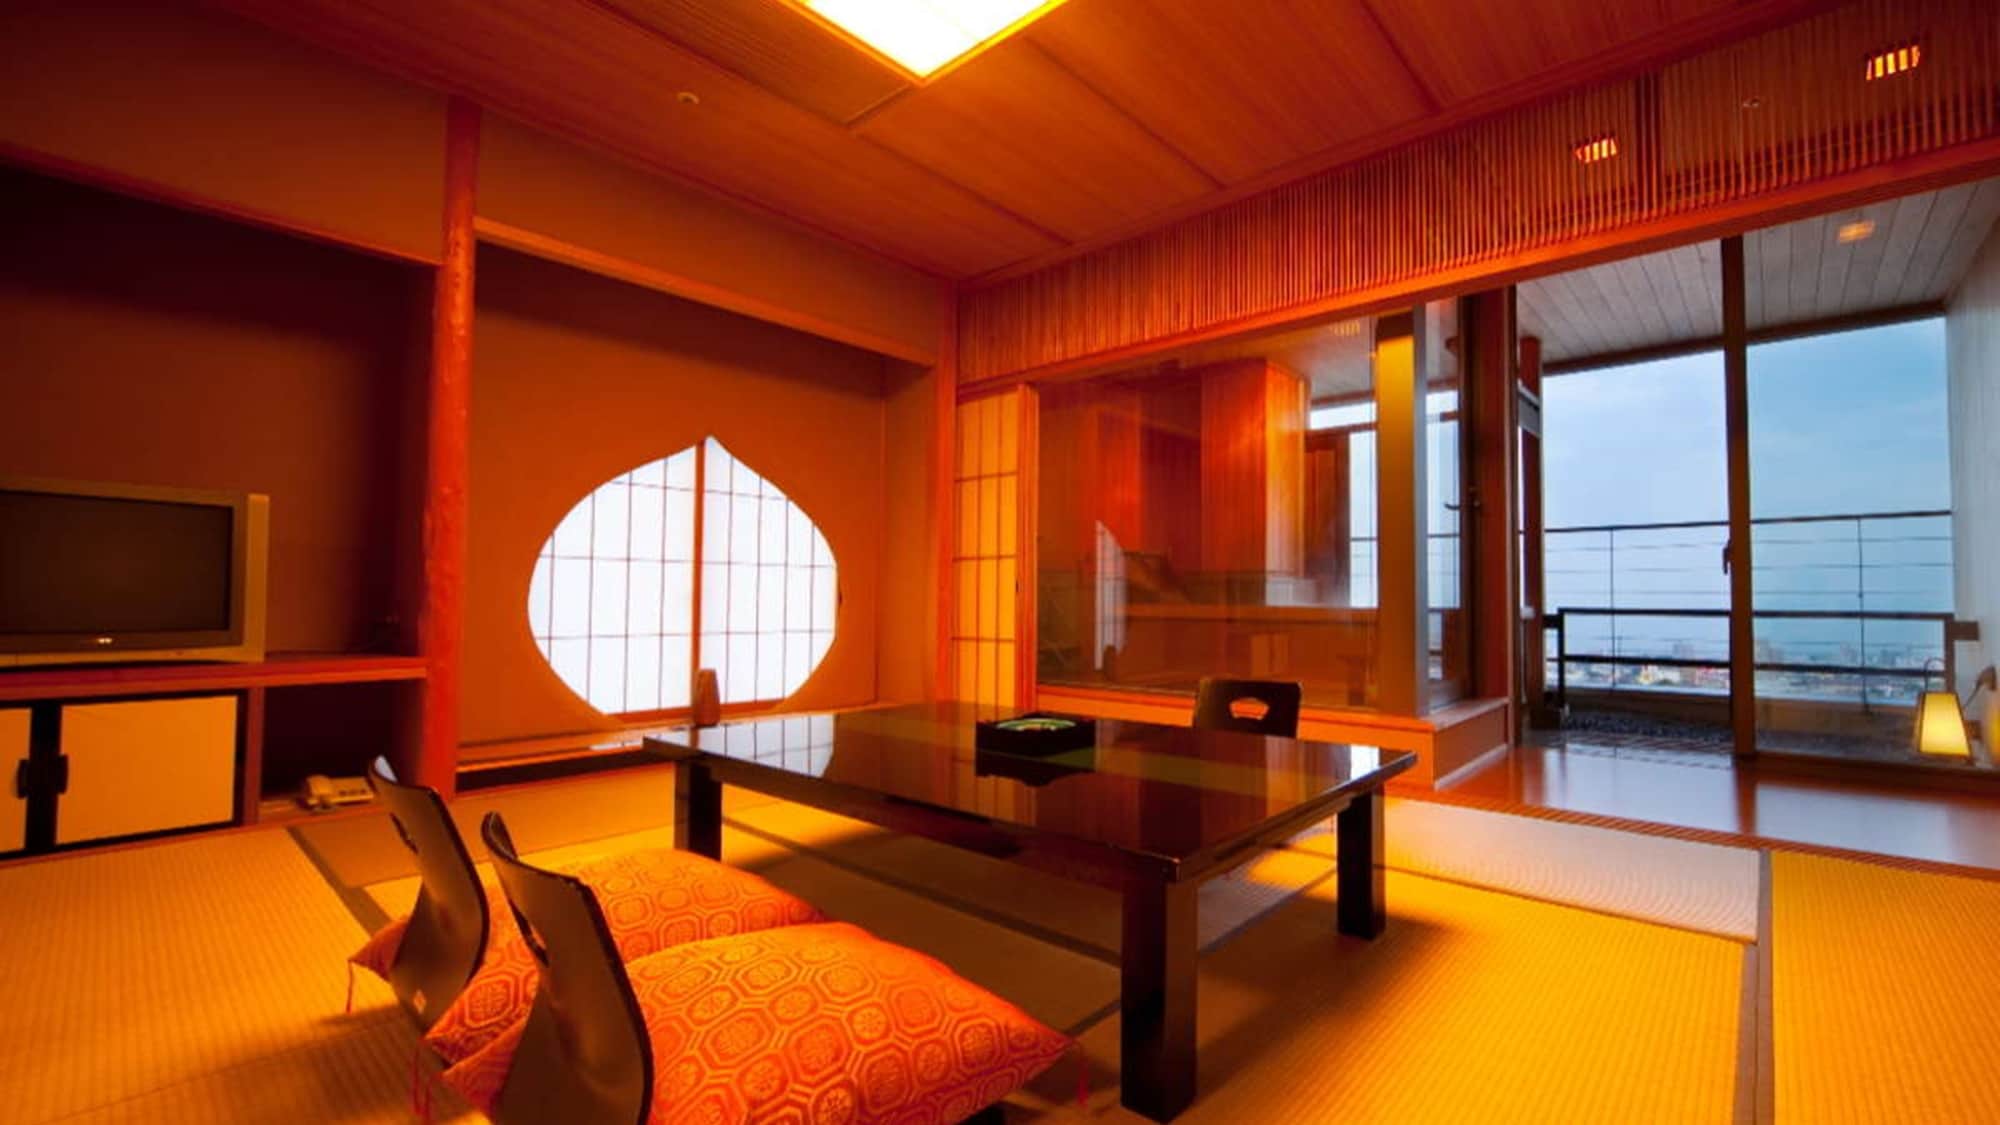 Kamar bergaya Jepang dengan pemandian terbuka "Nadeshiko Hanamizuki" / Ruang santai dengan pemandangan yang menciptakan perjalanan